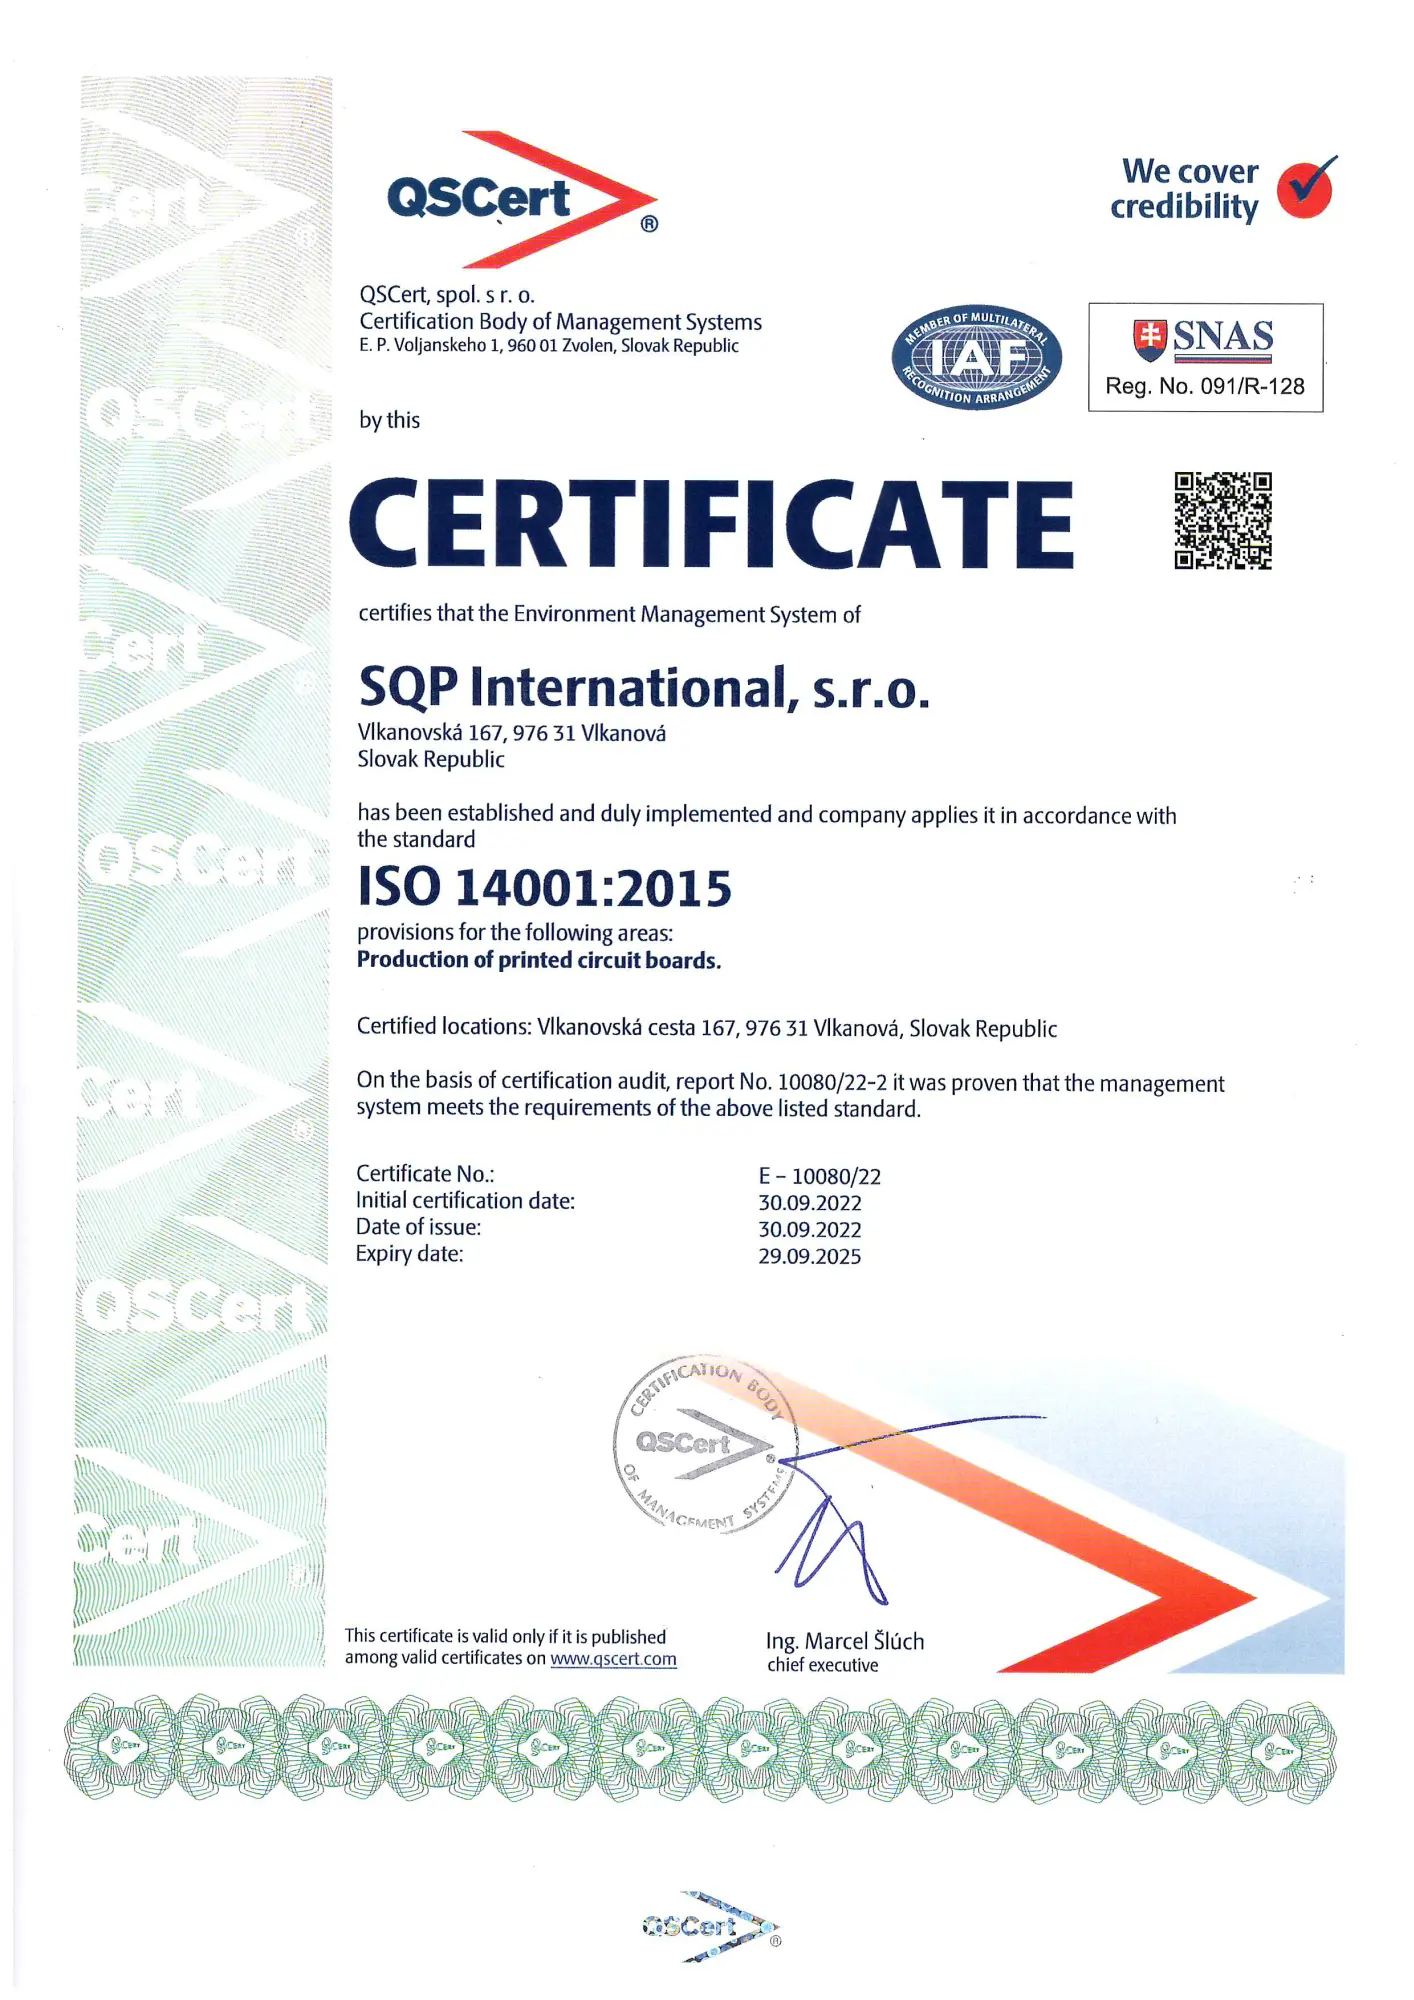 SQP International s.r.o. ISO 14001:2015 Certification